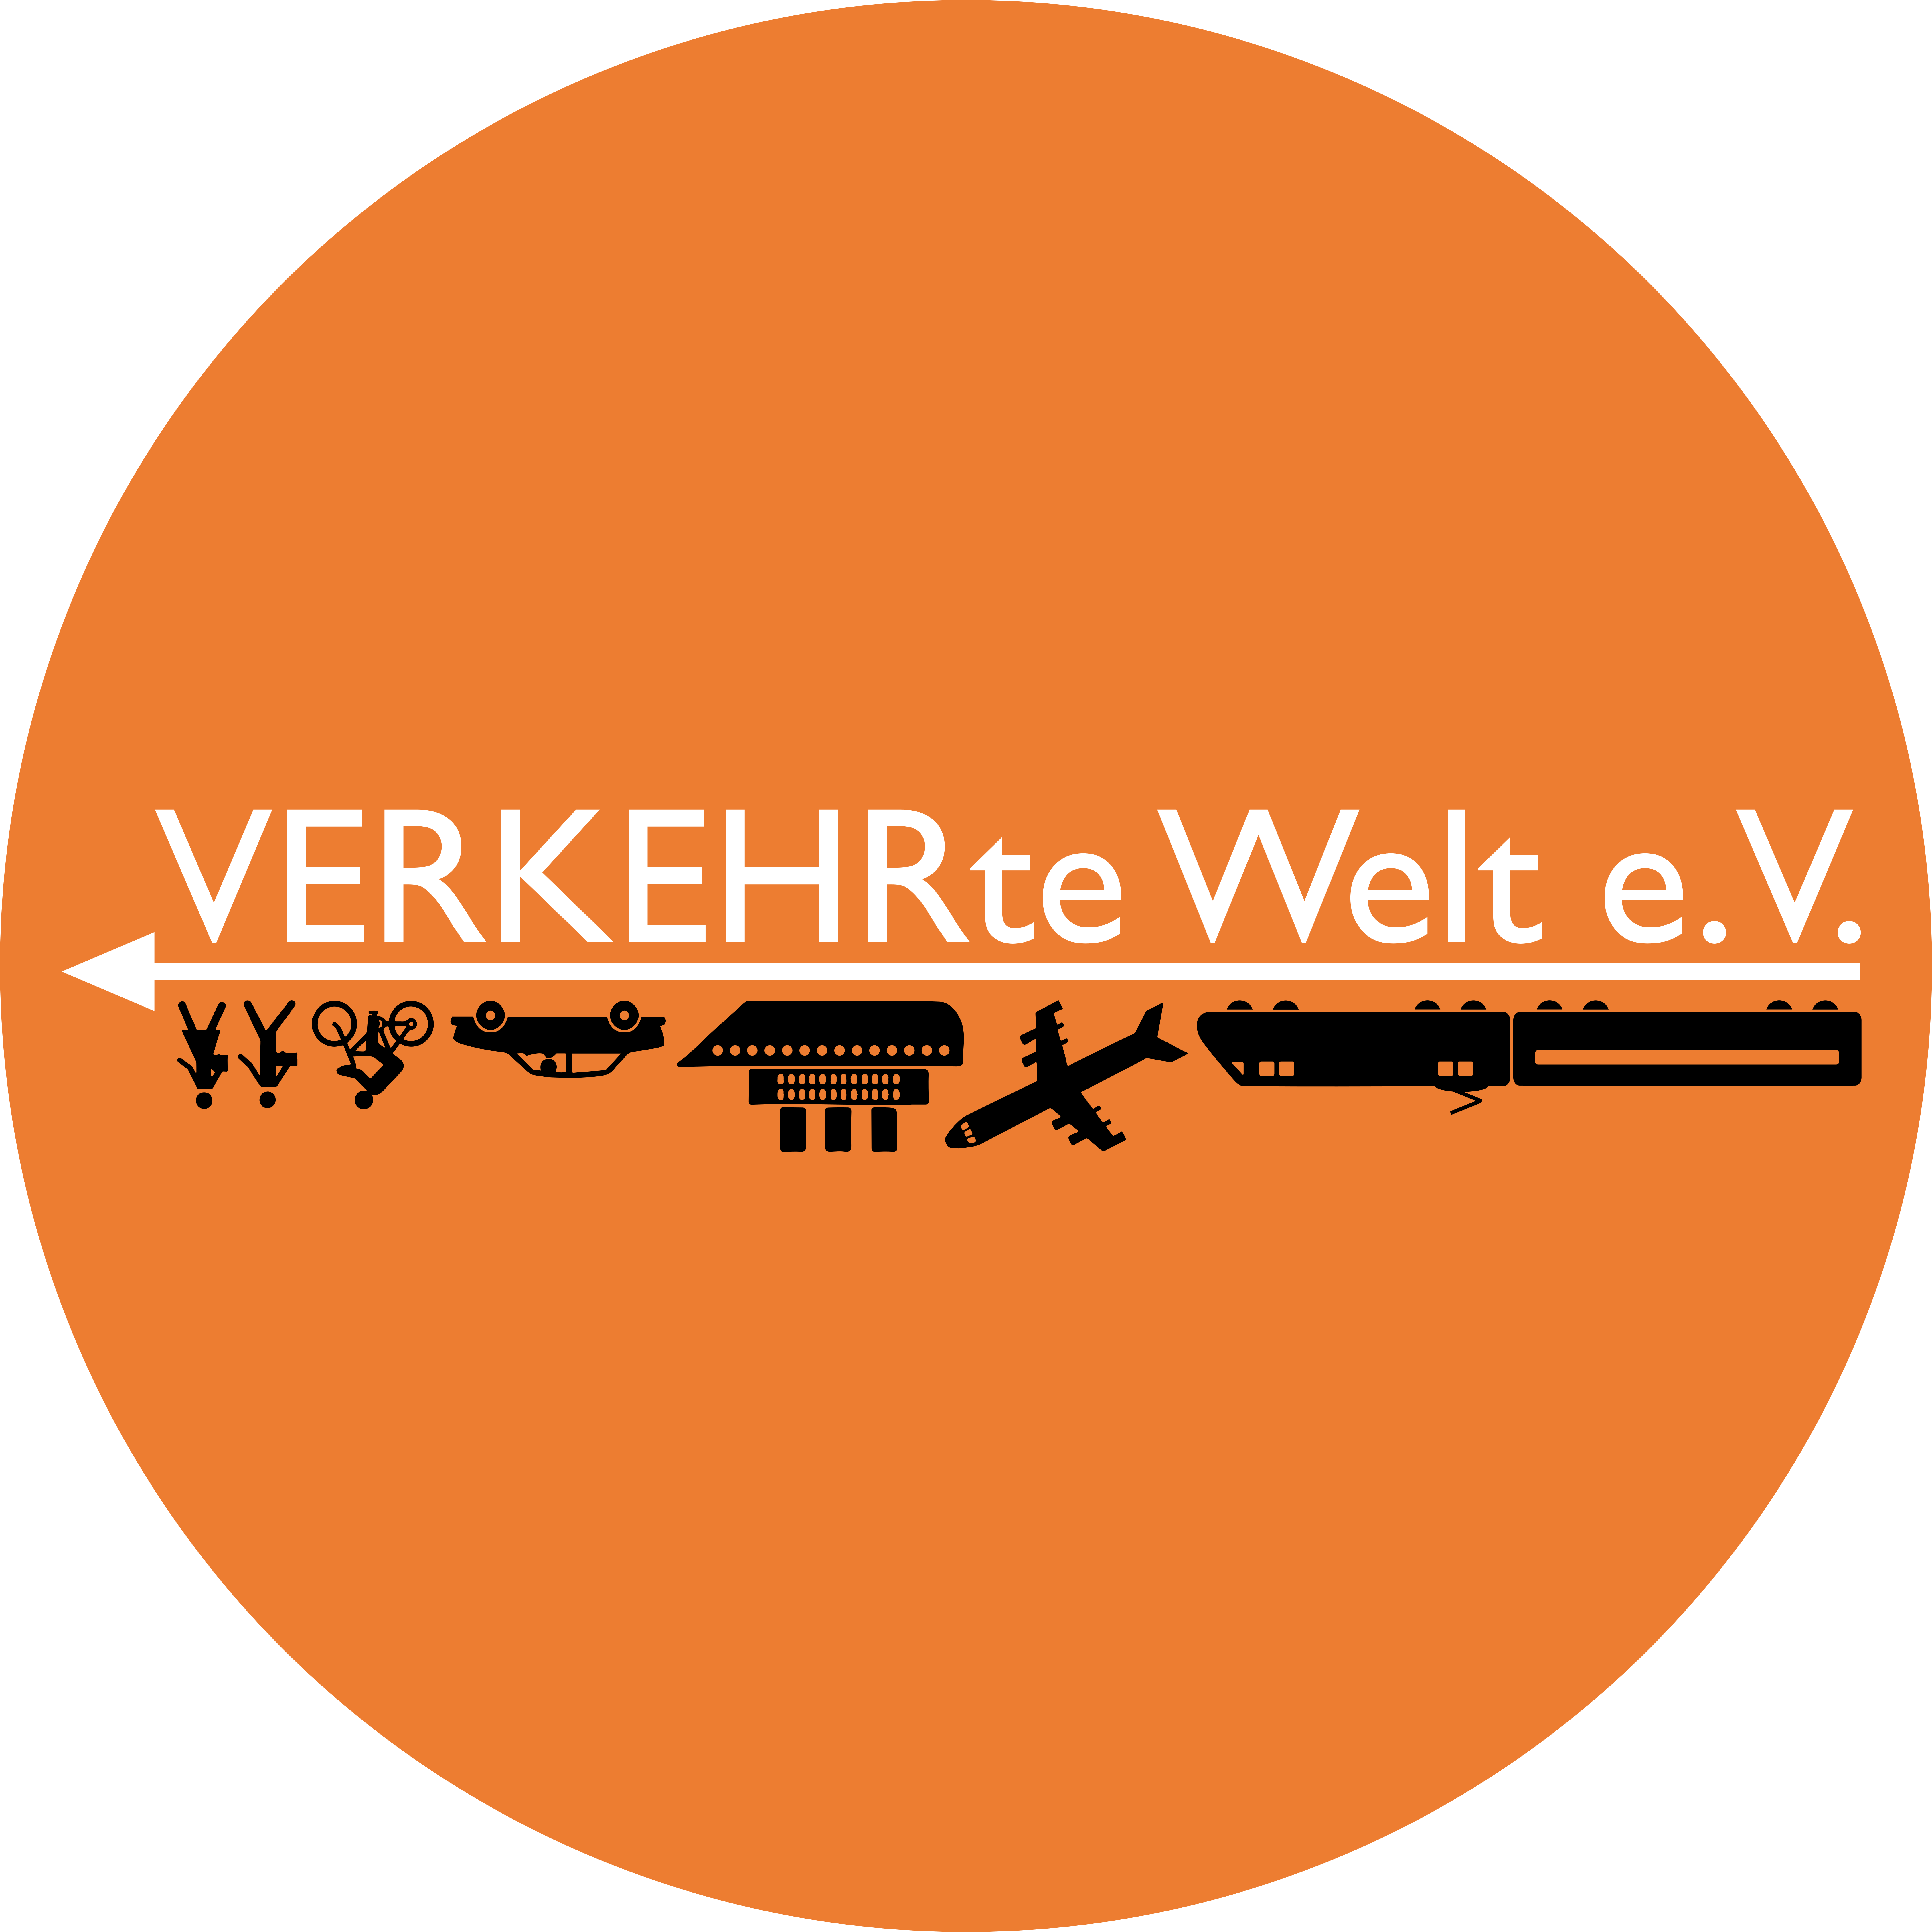 Meeting of the Verkehrte Welt